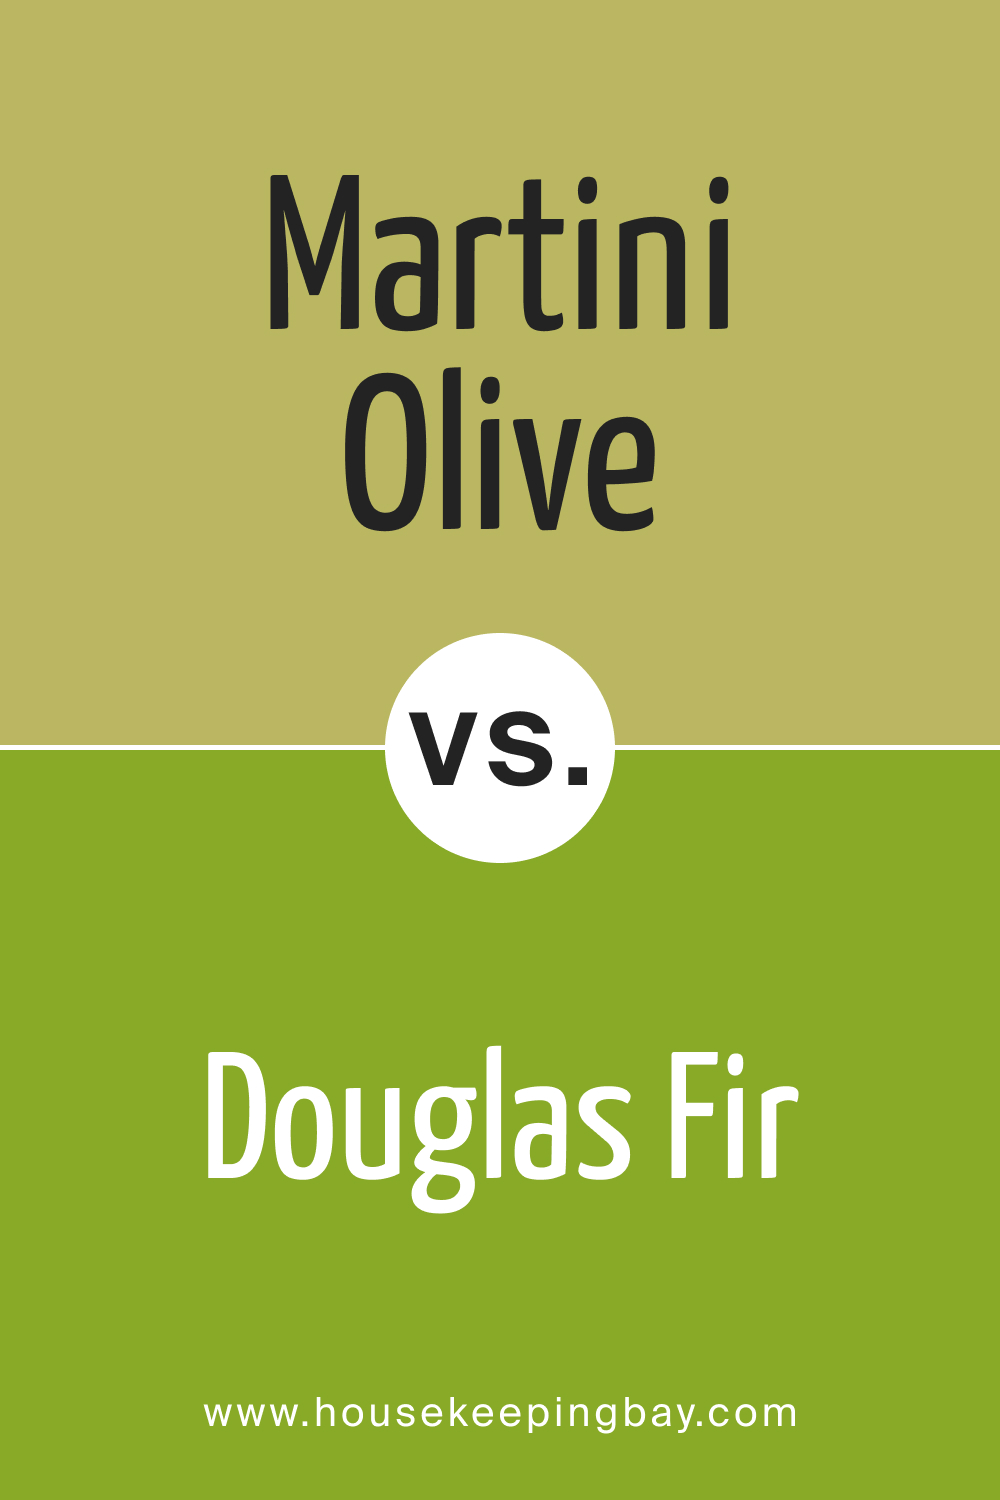 Martini Olive CSP-890 vs. BM 2028-20 Douglas Fir